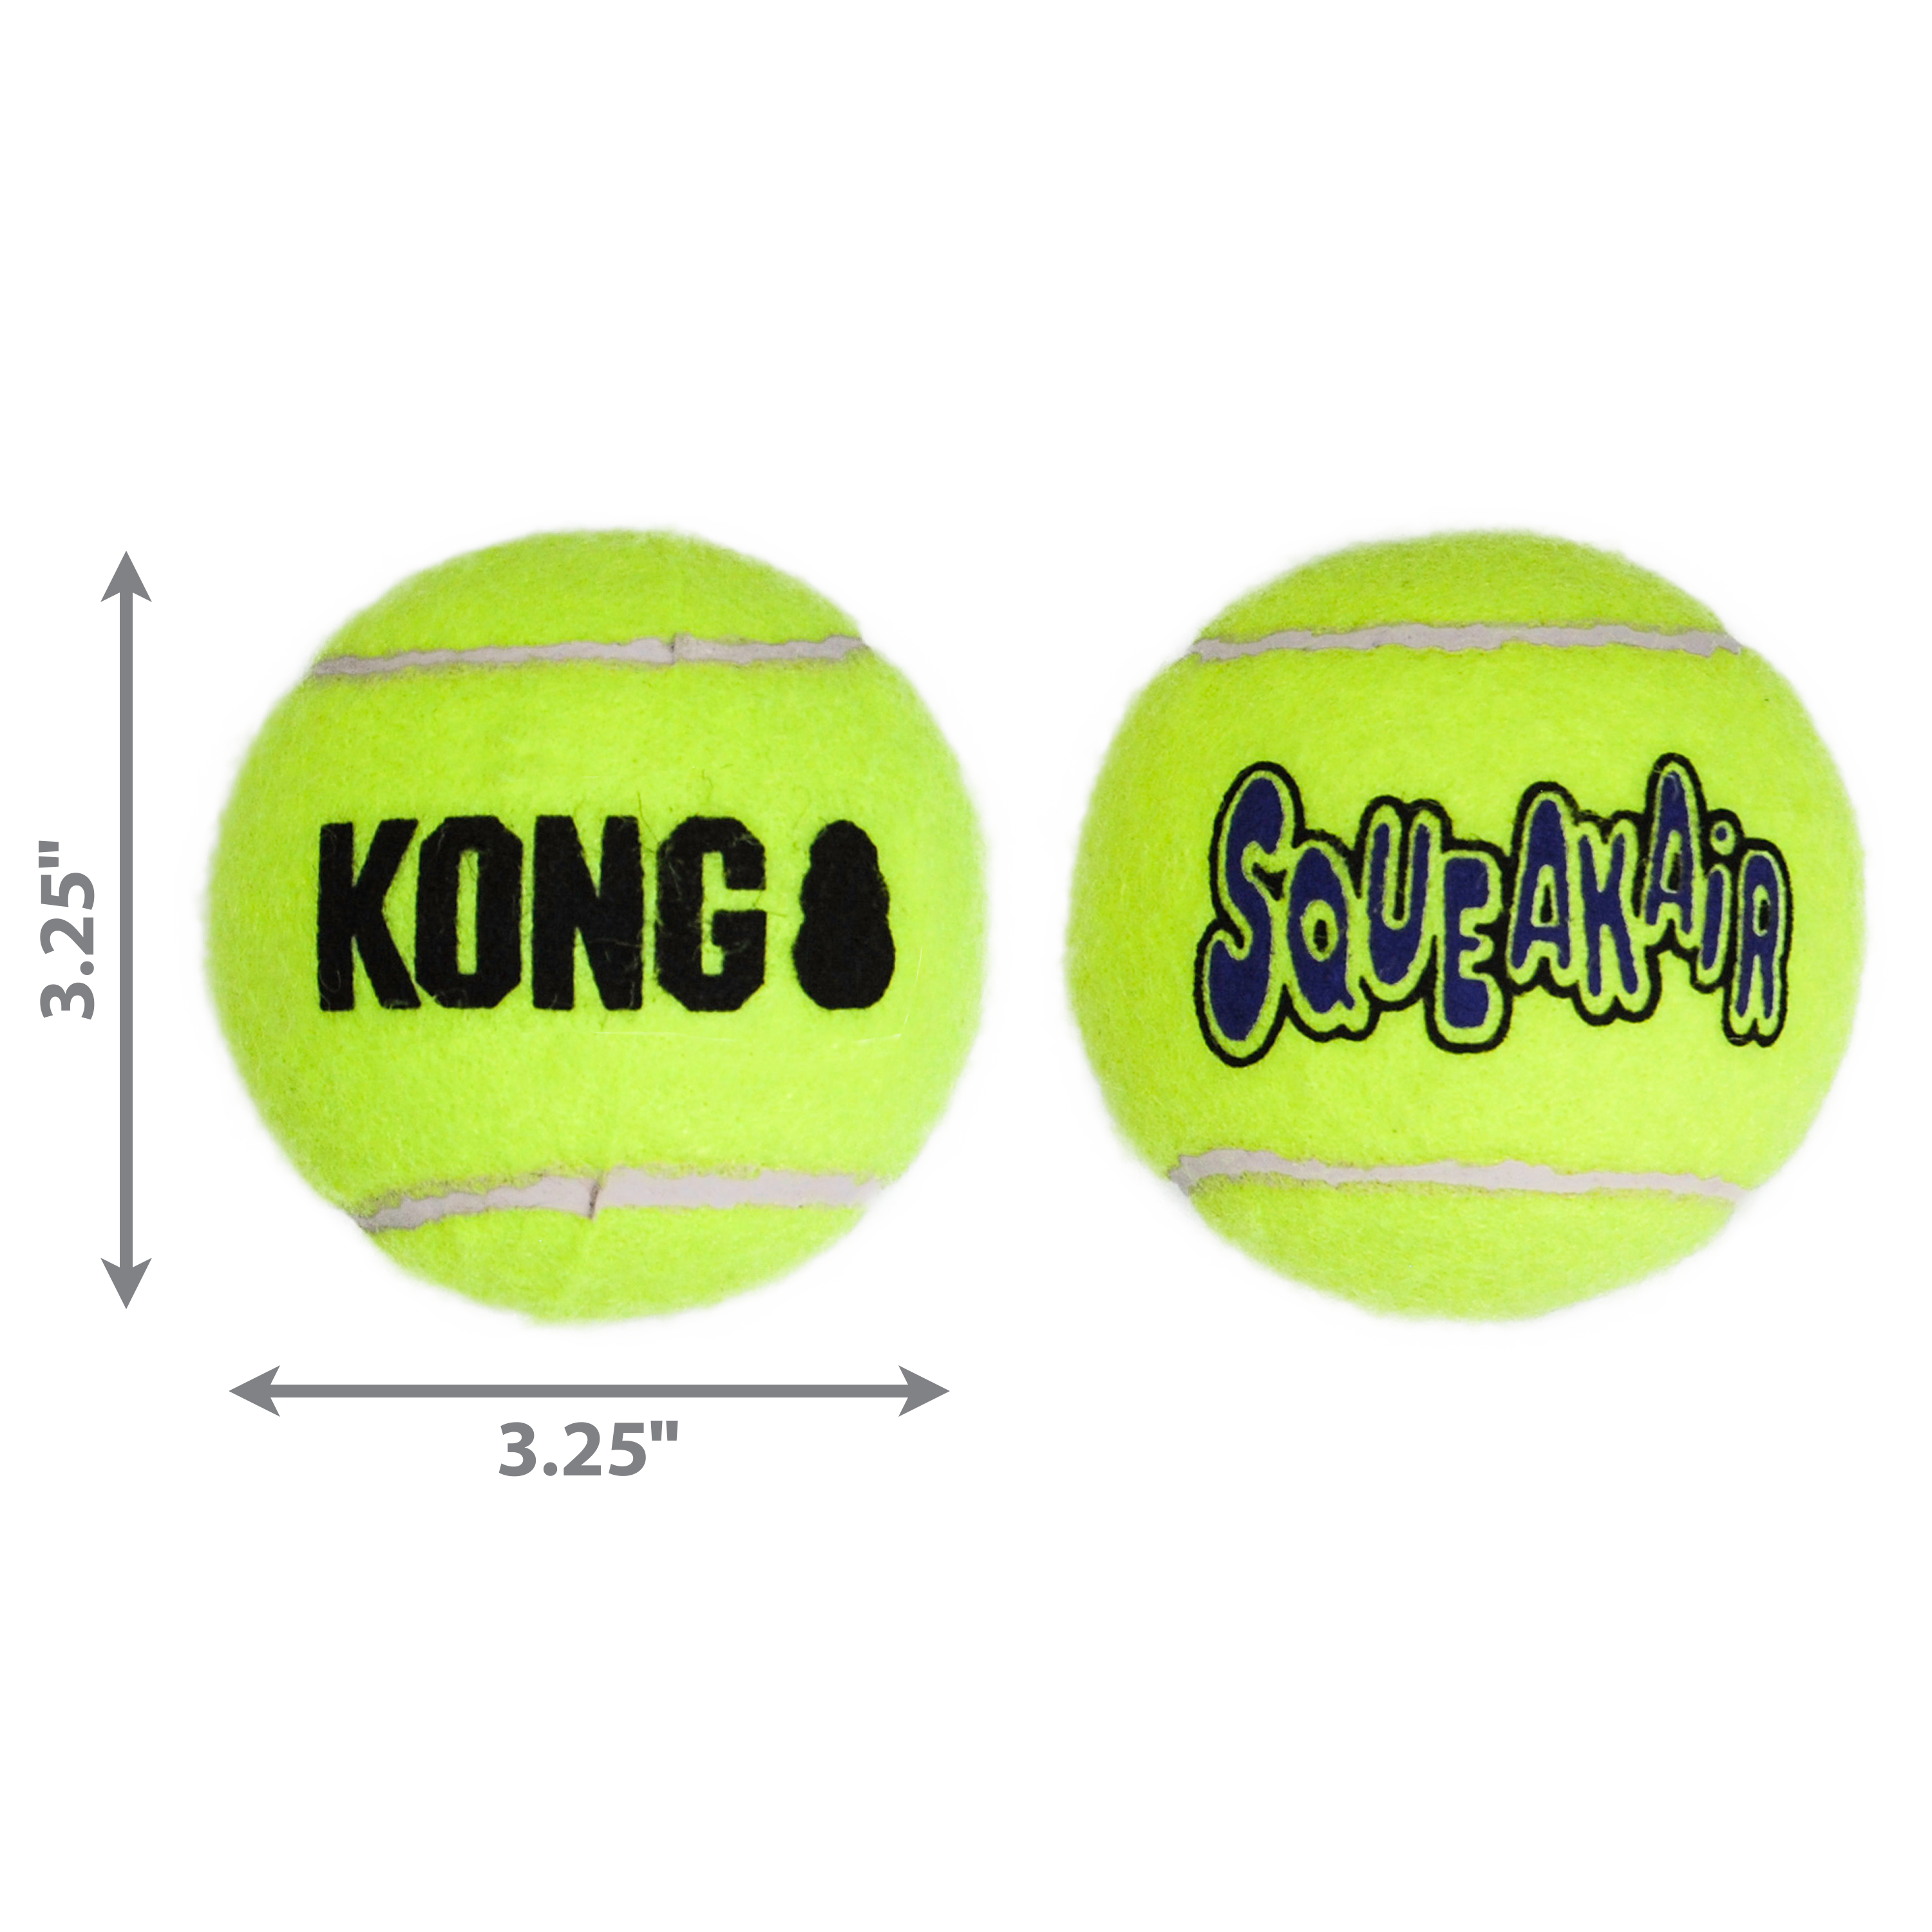 SqueakAir Ball dimoffpack product image